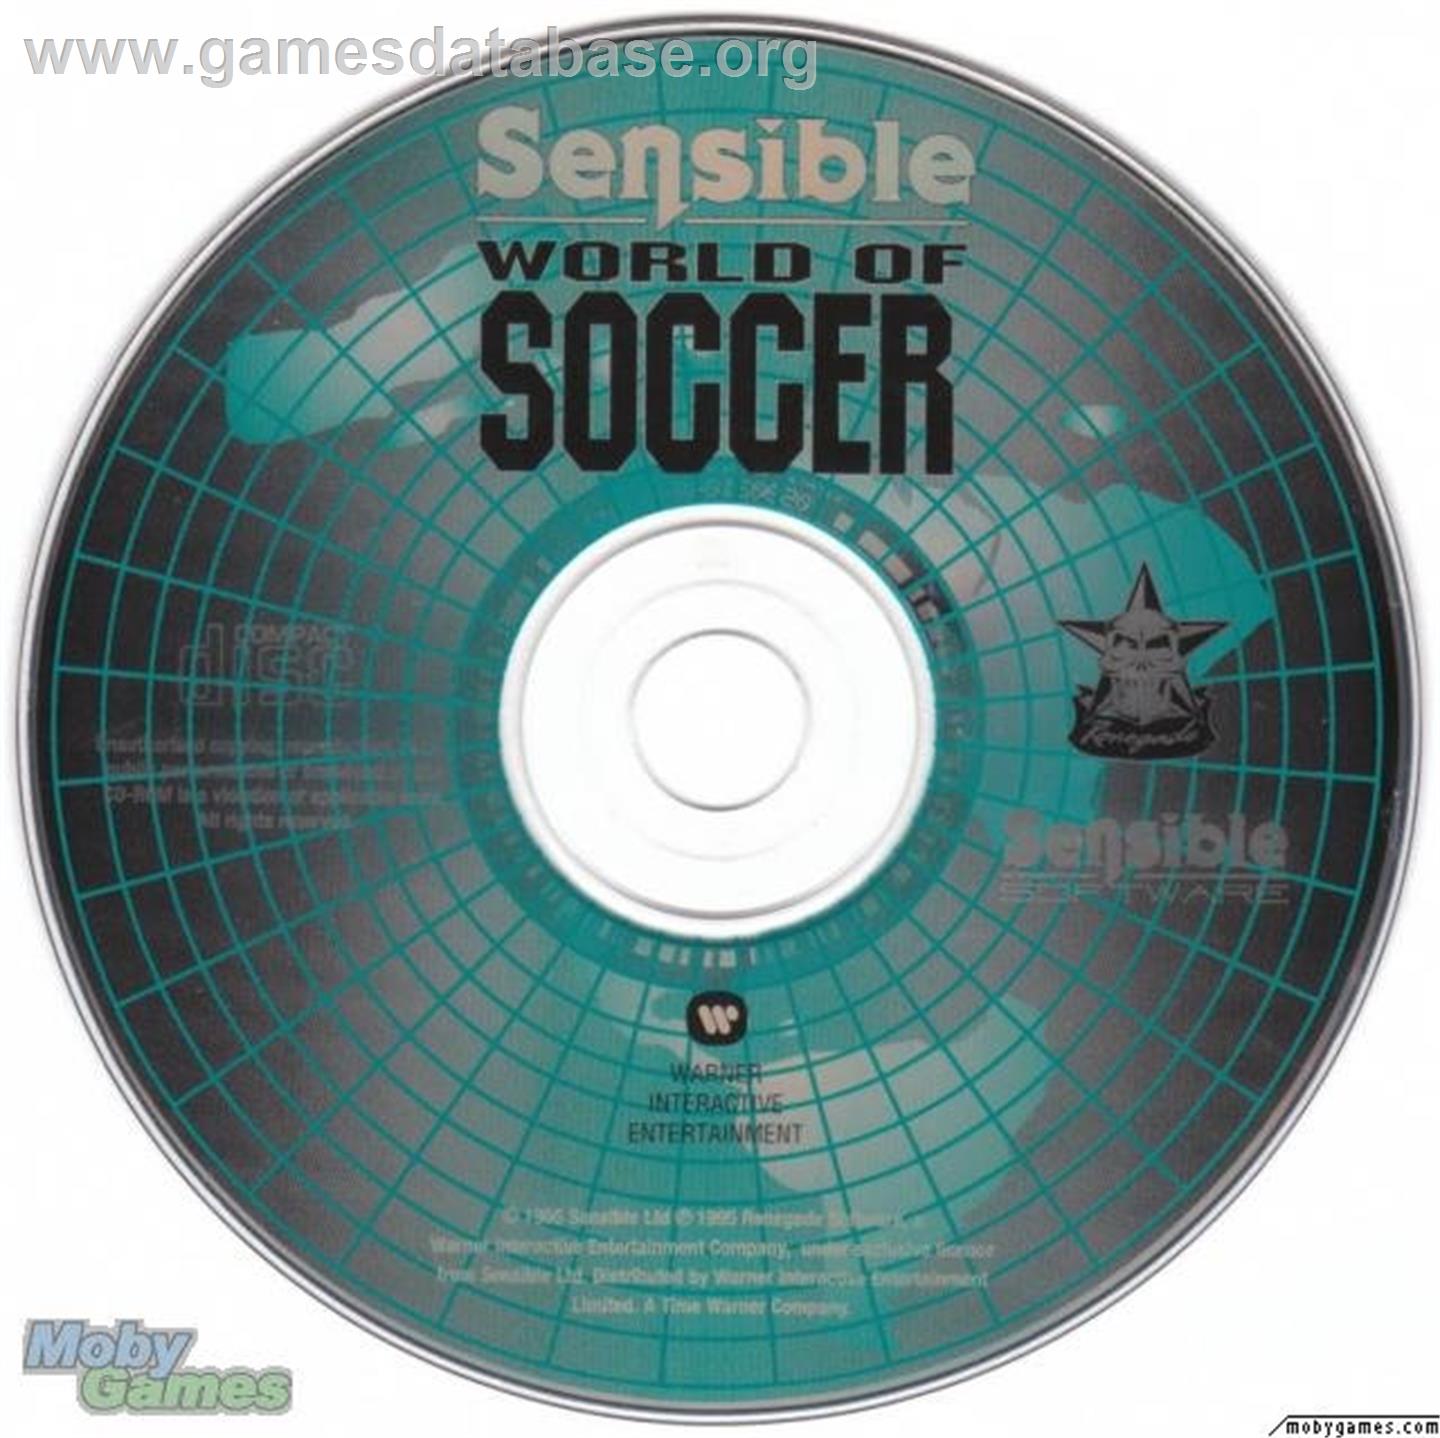 Sensible World of Soccer - Microsoft DOS - Artwork - Disc